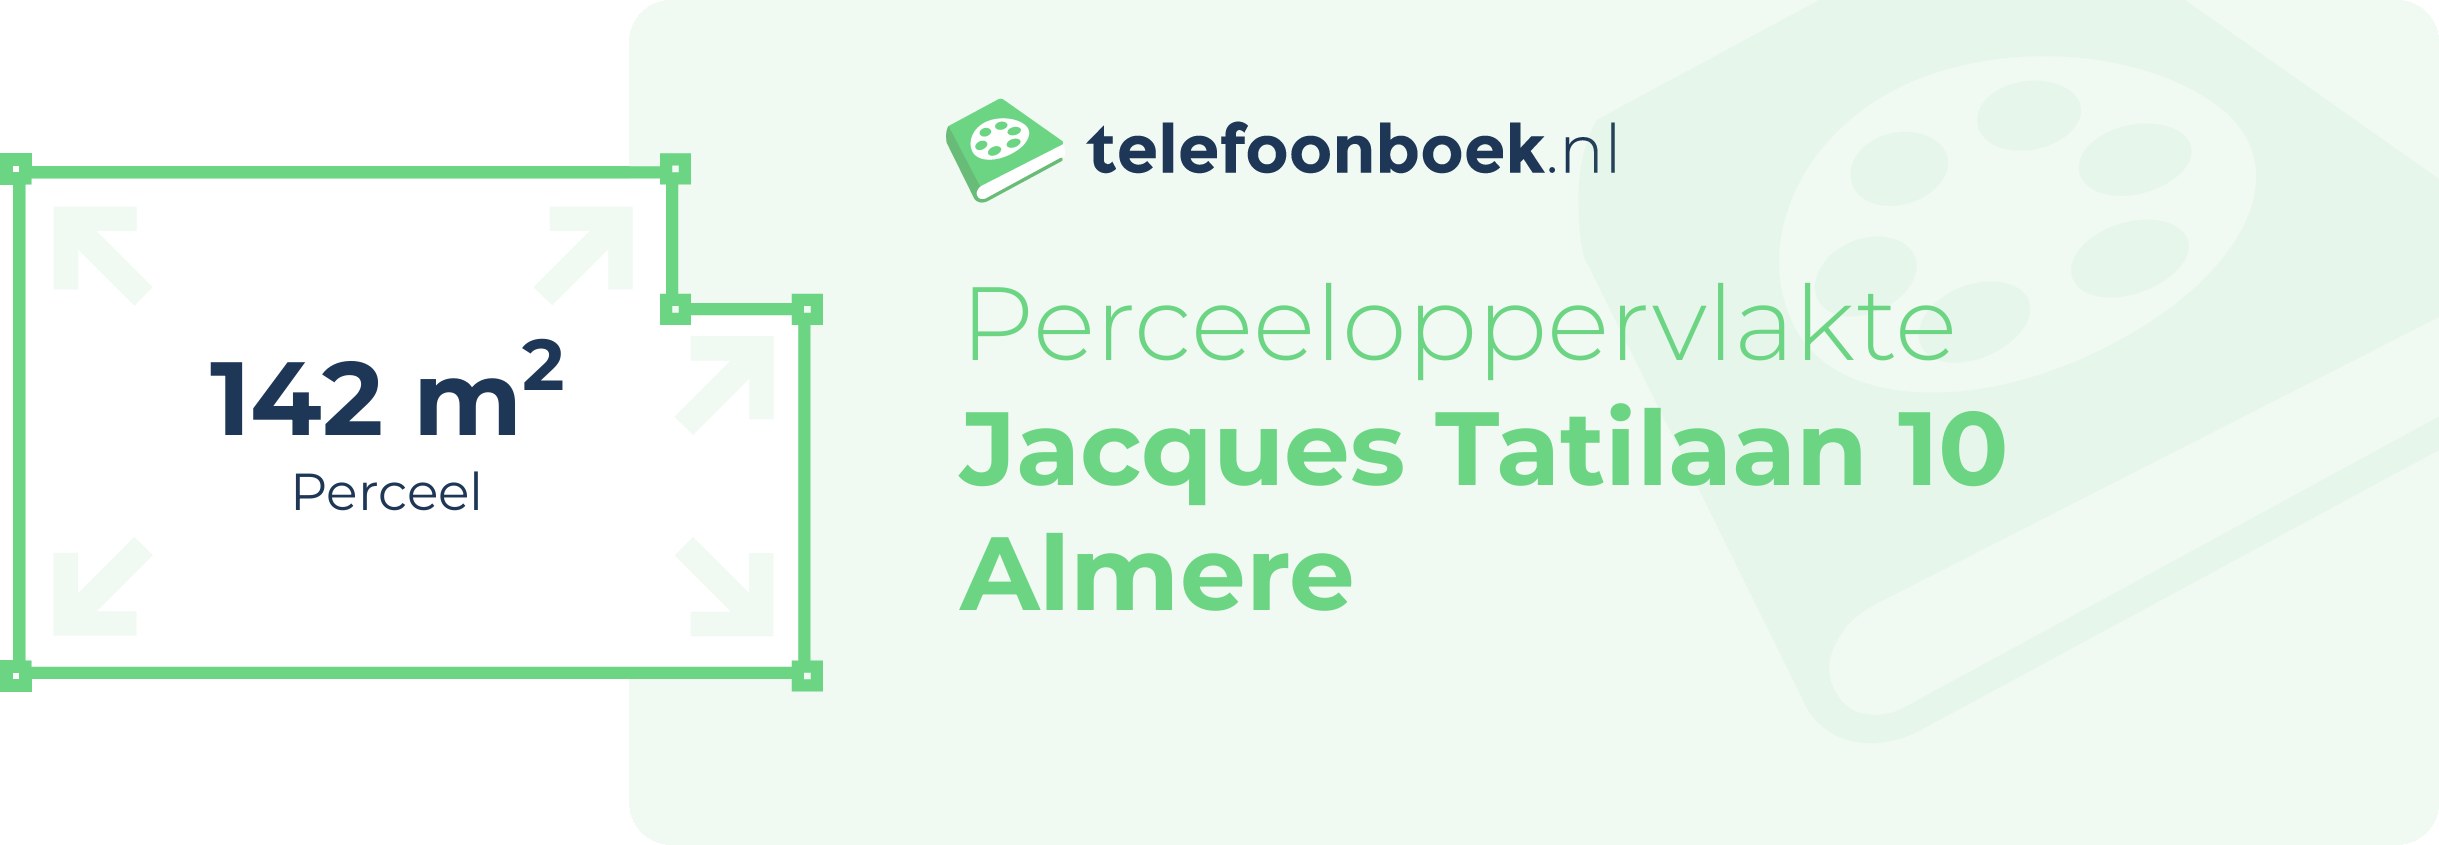 Perceeloppervlakte Jacques Tatilaan 10 Almere